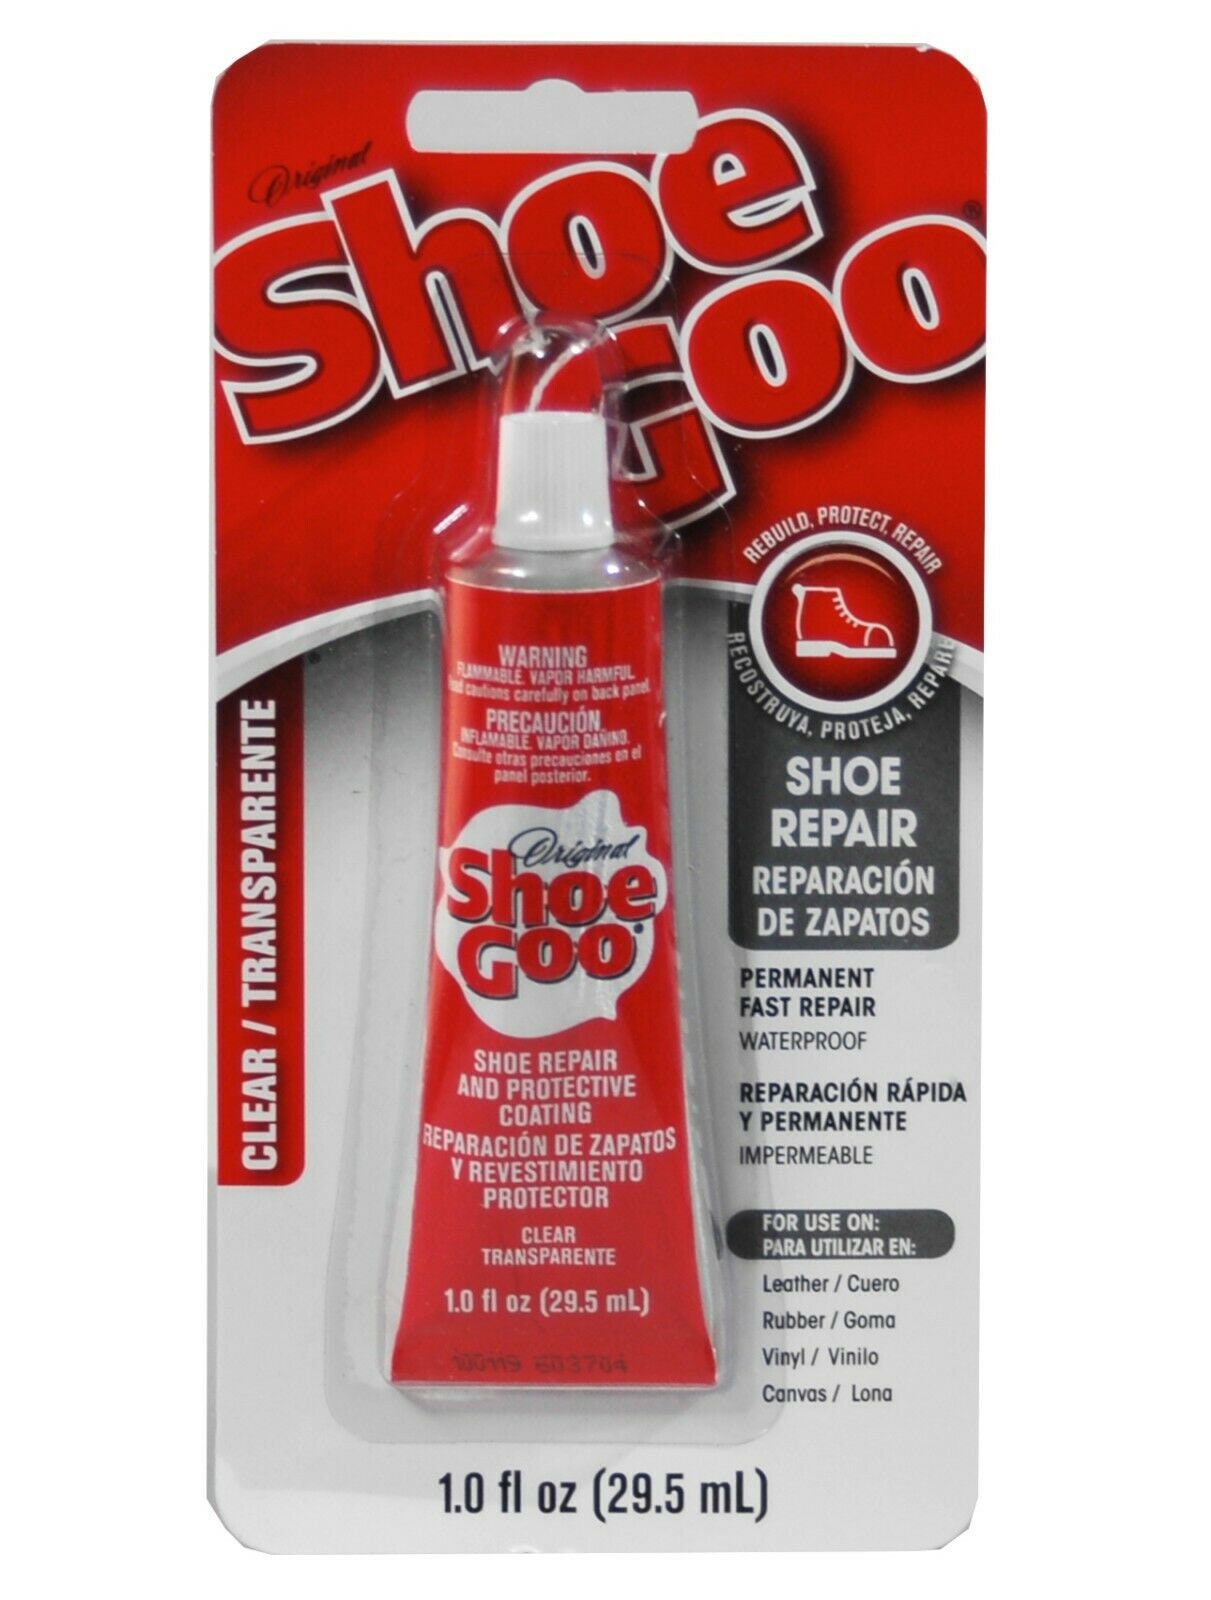 Shoe GOO-CLEAR